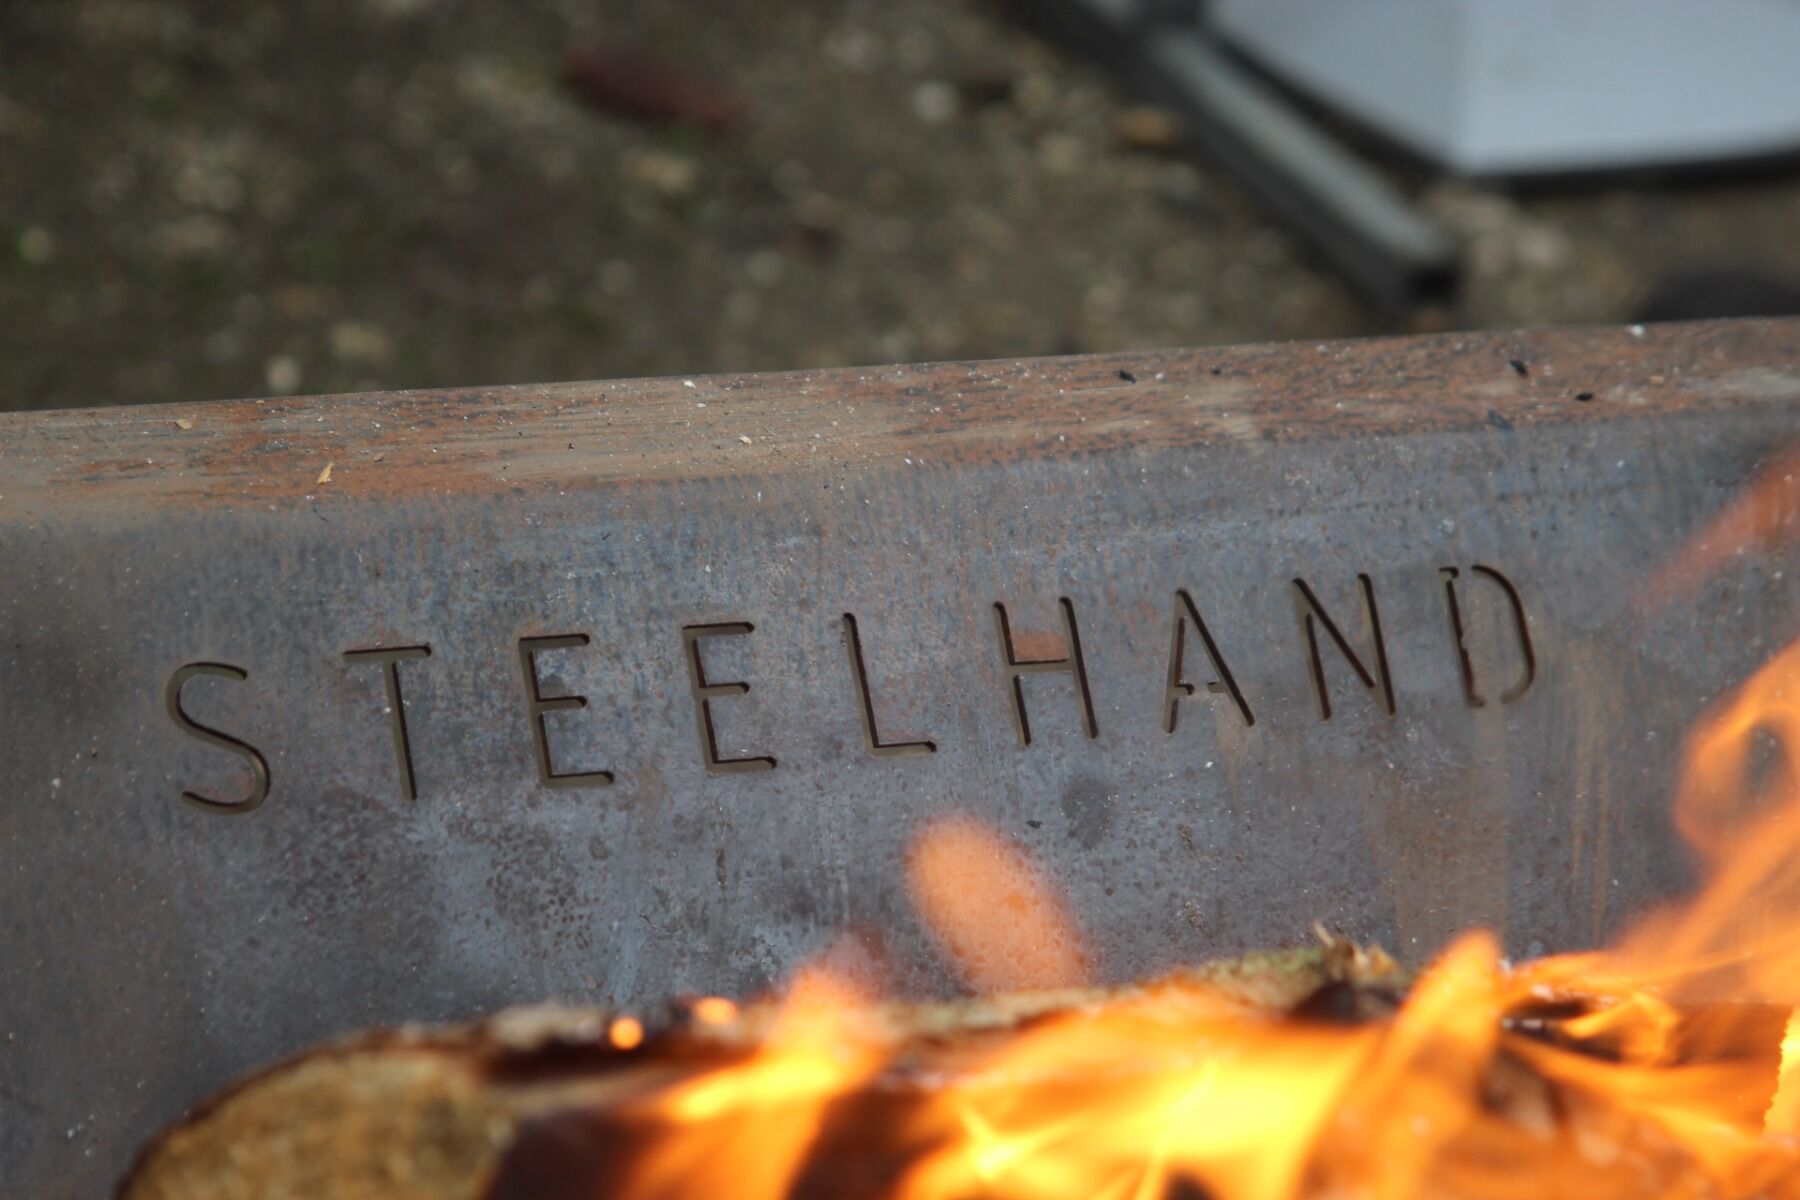 Steelhand V-Pit Vuurkorf